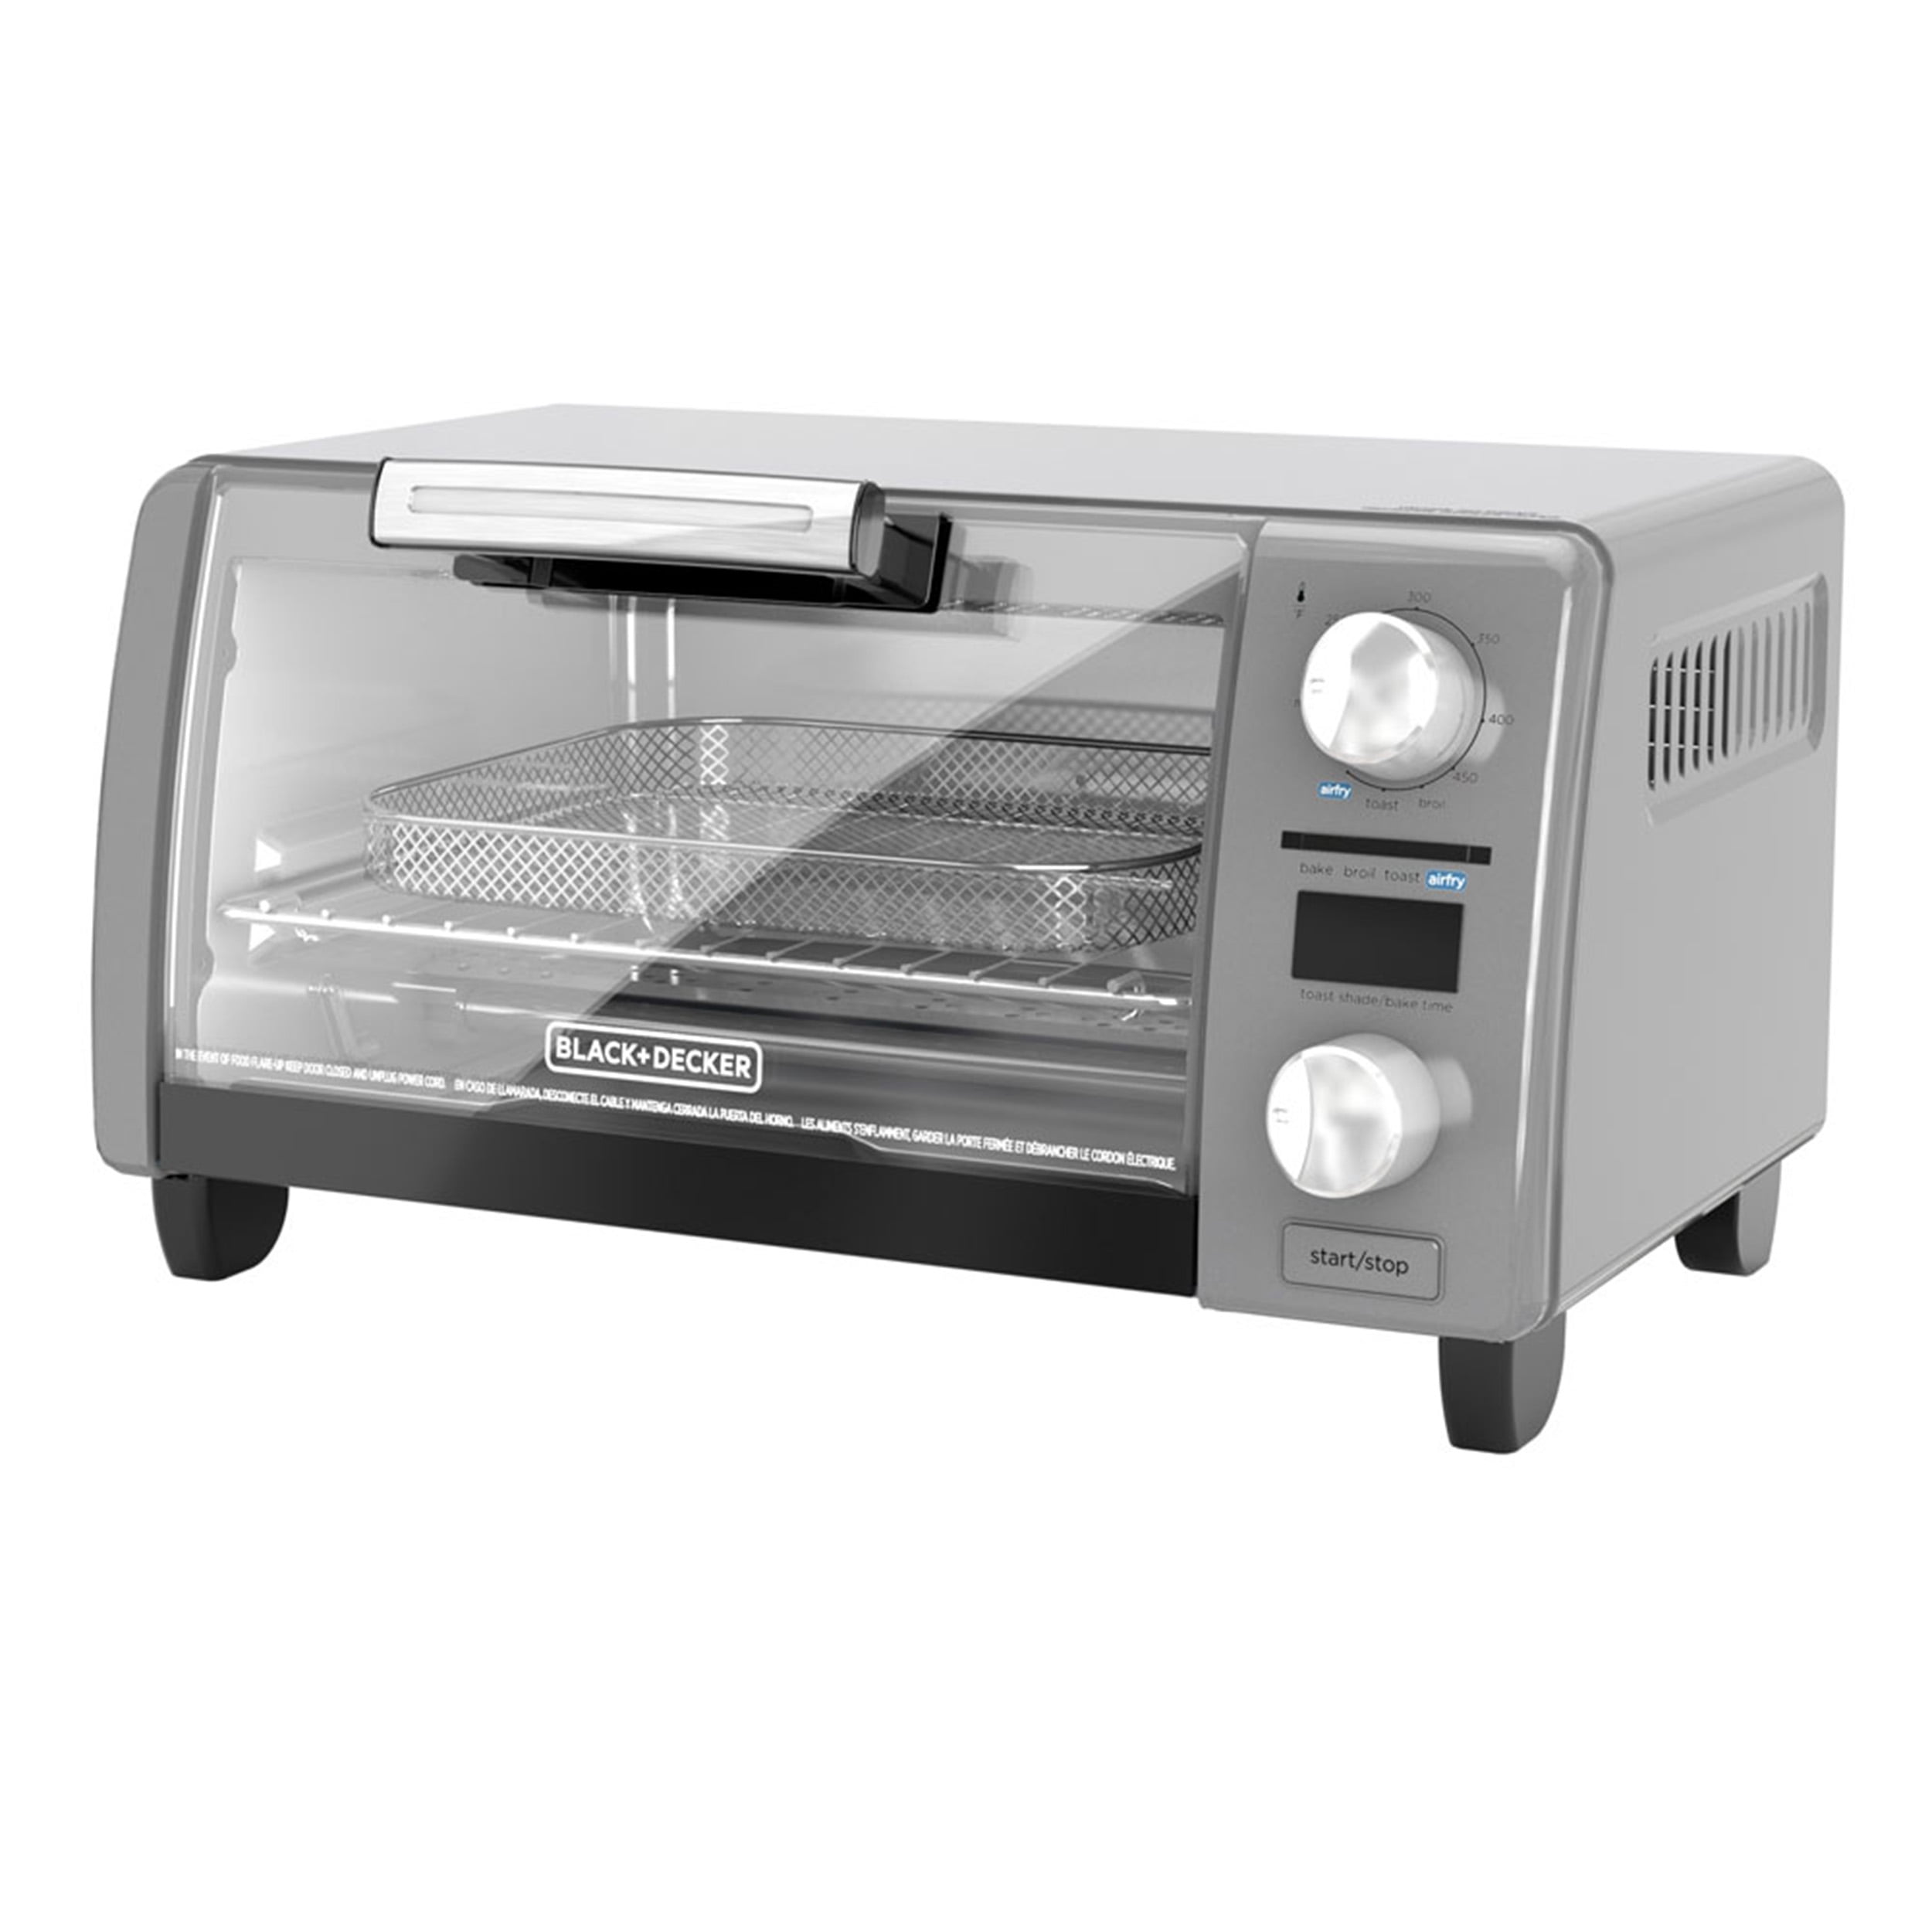 Black+decker Crisp N Bake Air Fry Toaster Oven